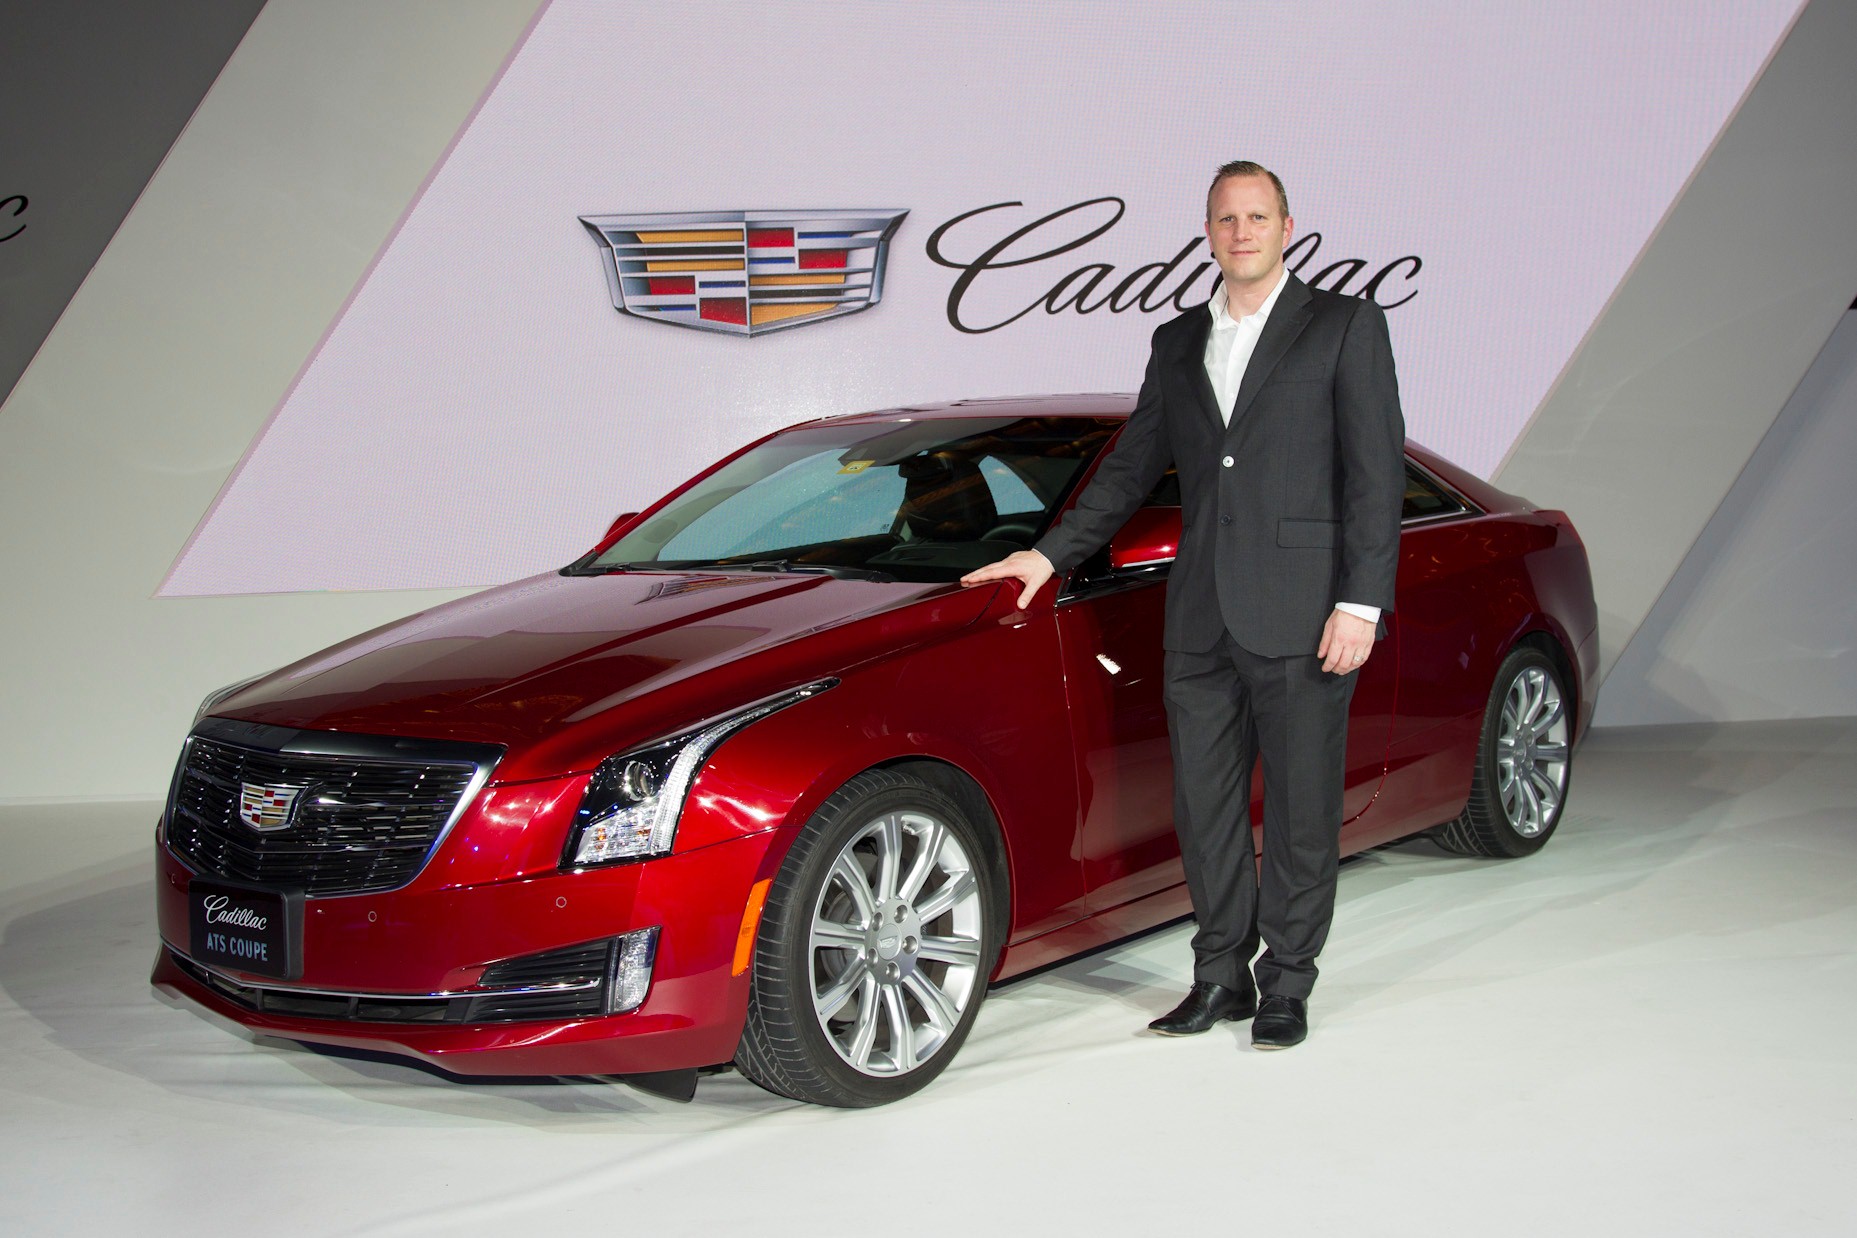 صور ومواصفات واسعار كاديلاك كوبيه Felix-with-2015-Cadillac-ATS-Coupe.jpg